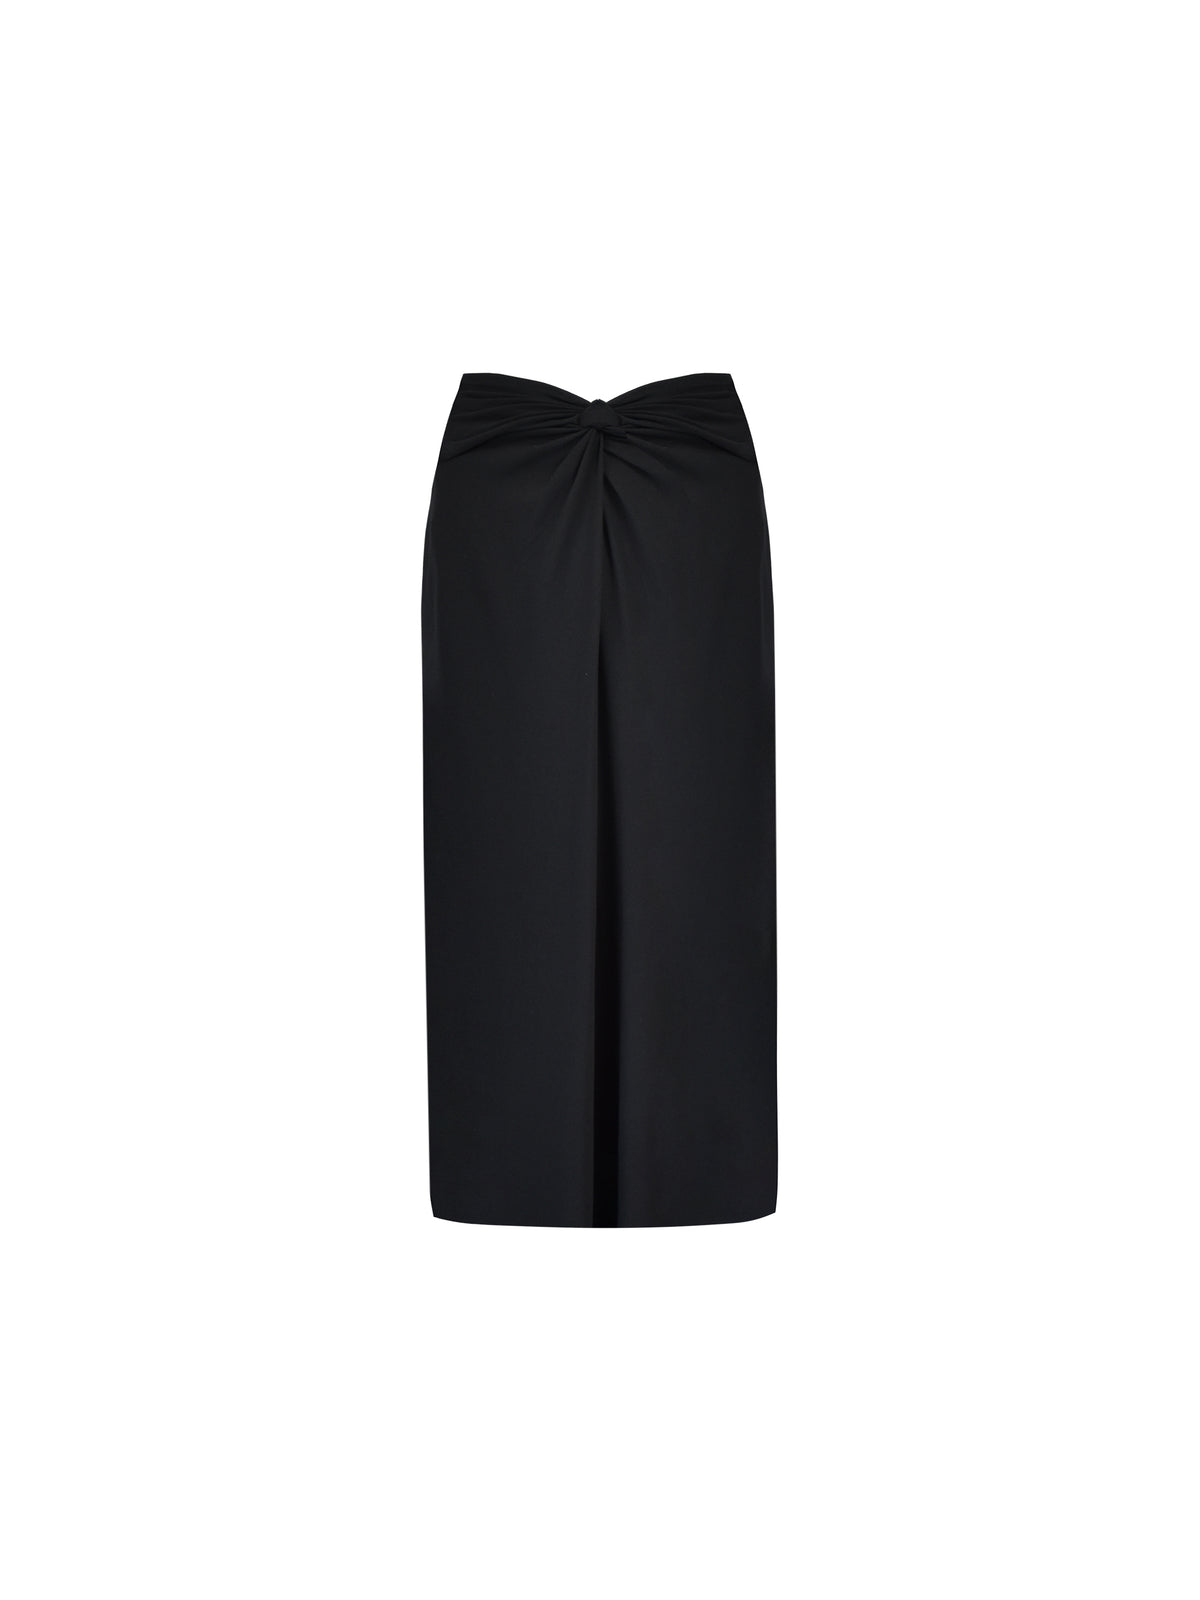 Black Jersey Twist Front Skirt